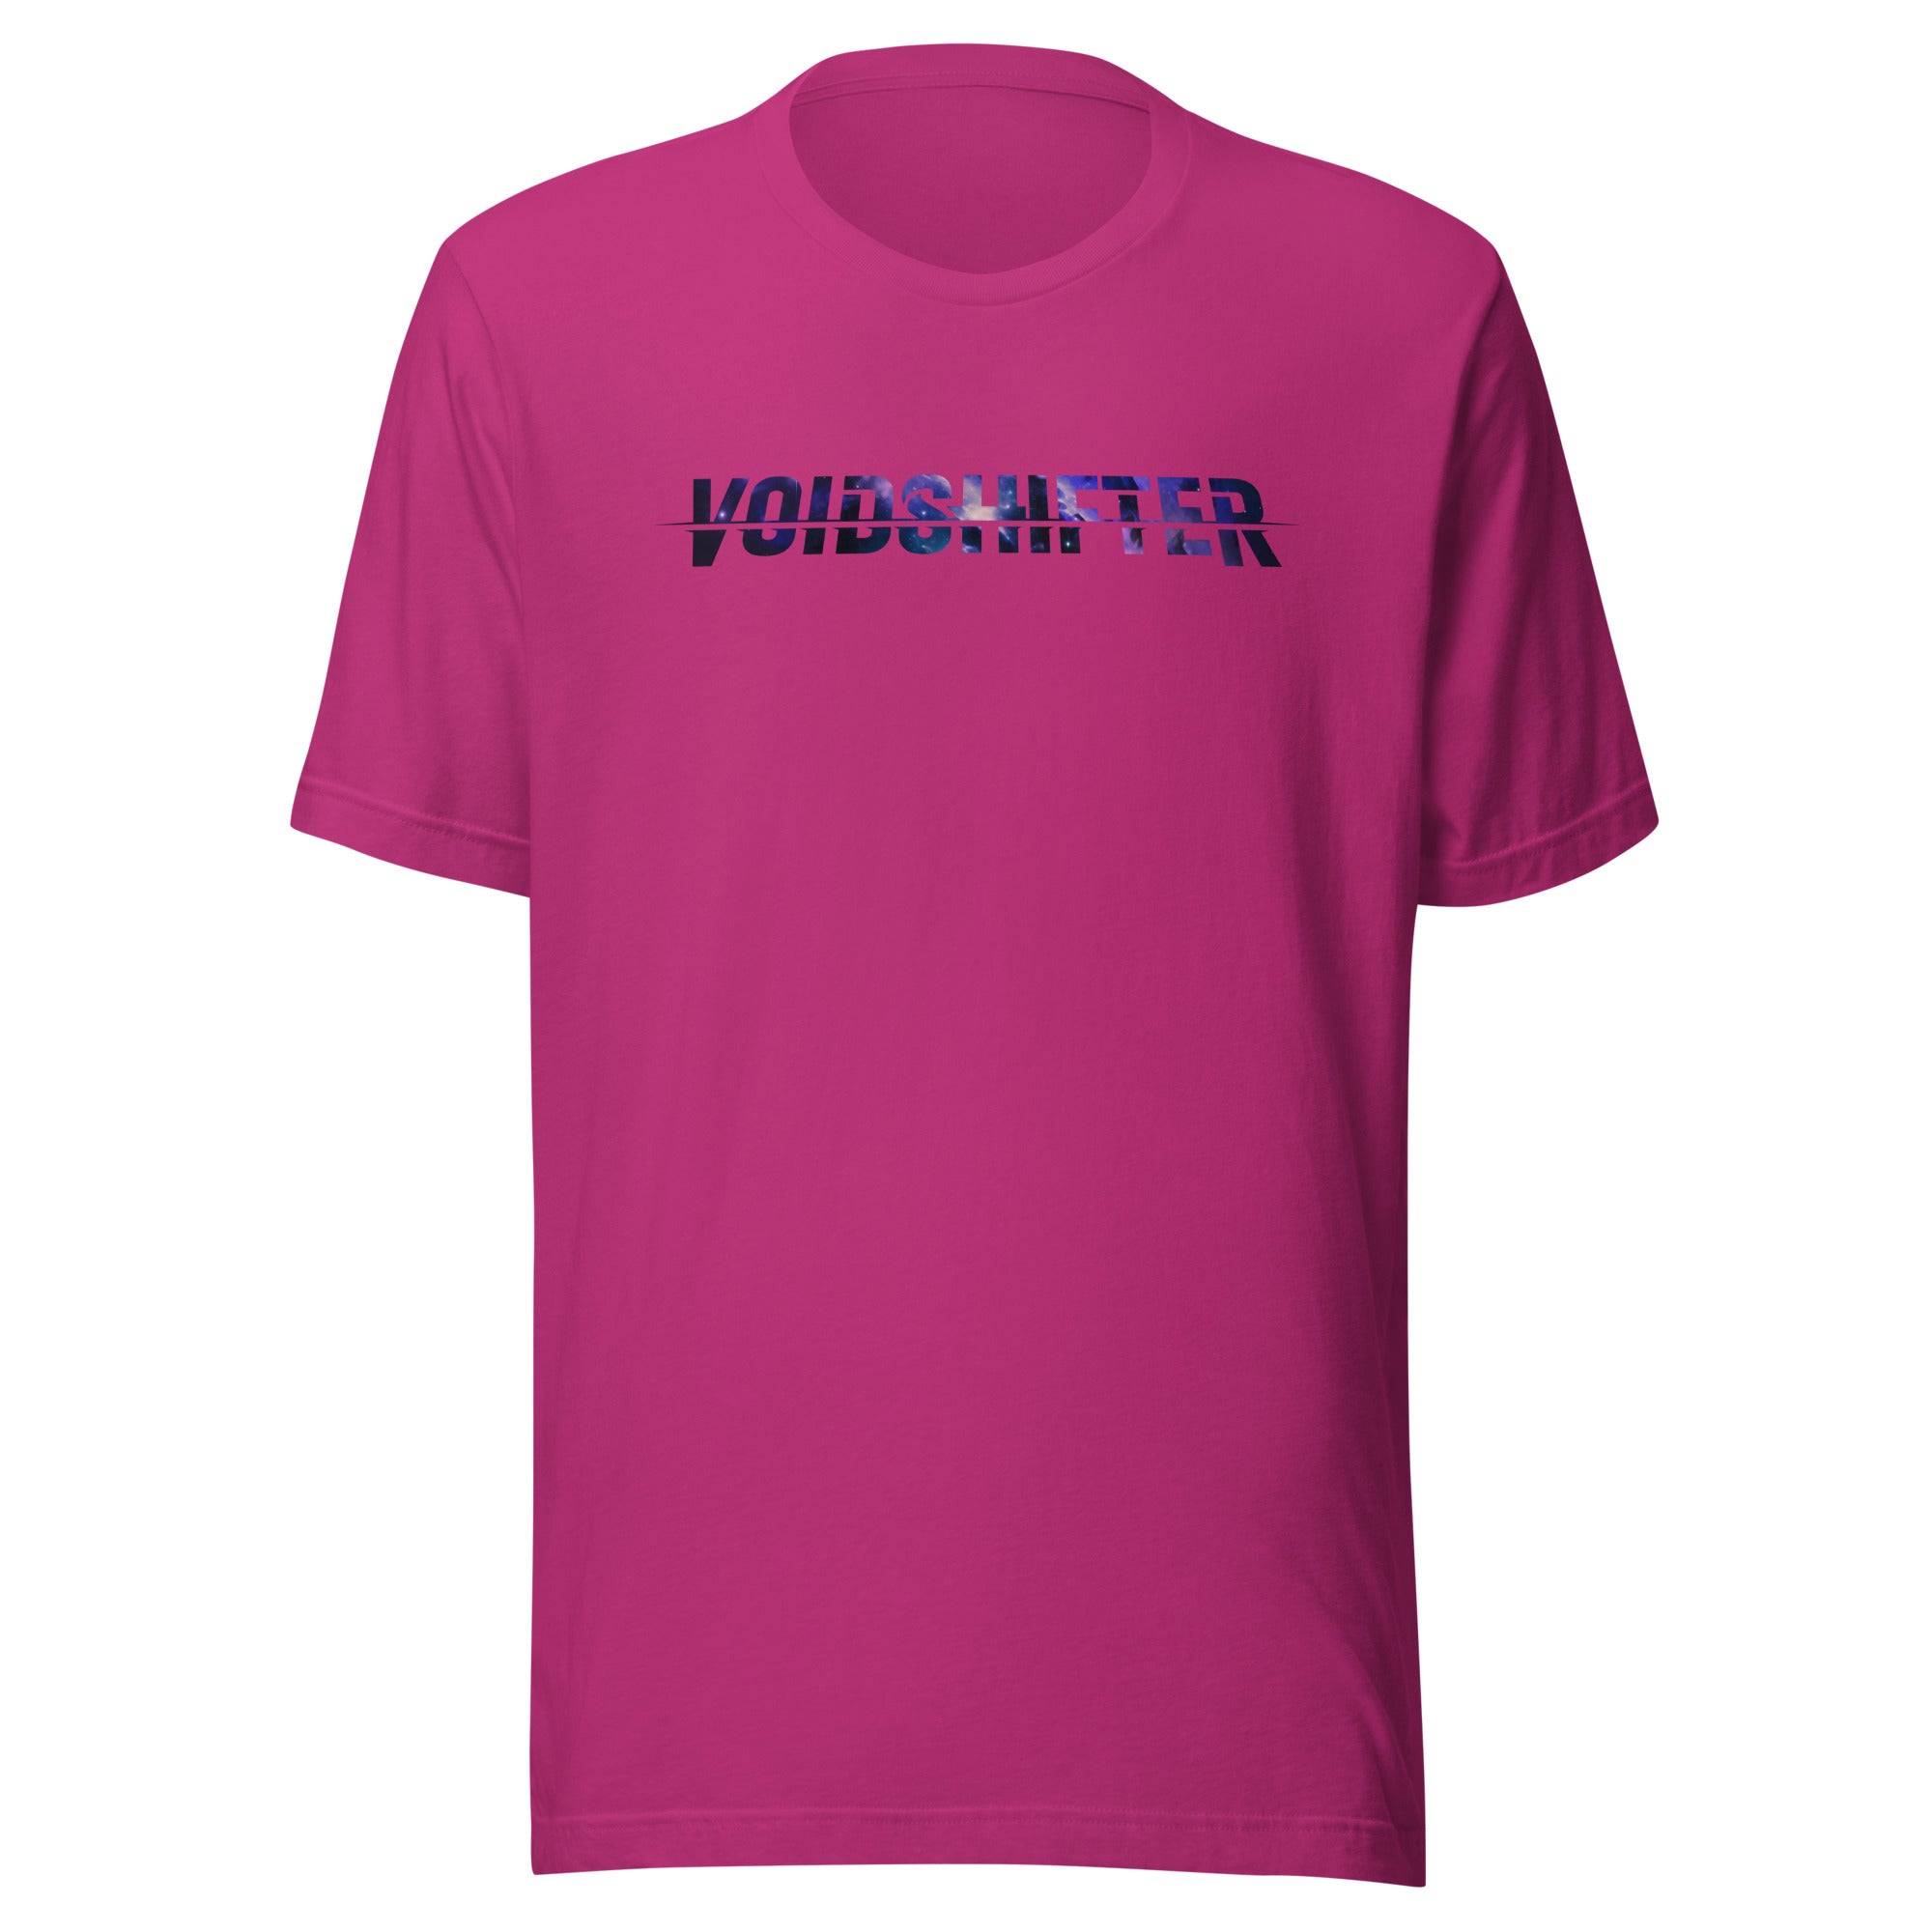 Voidshifter - Unisex t-shirt